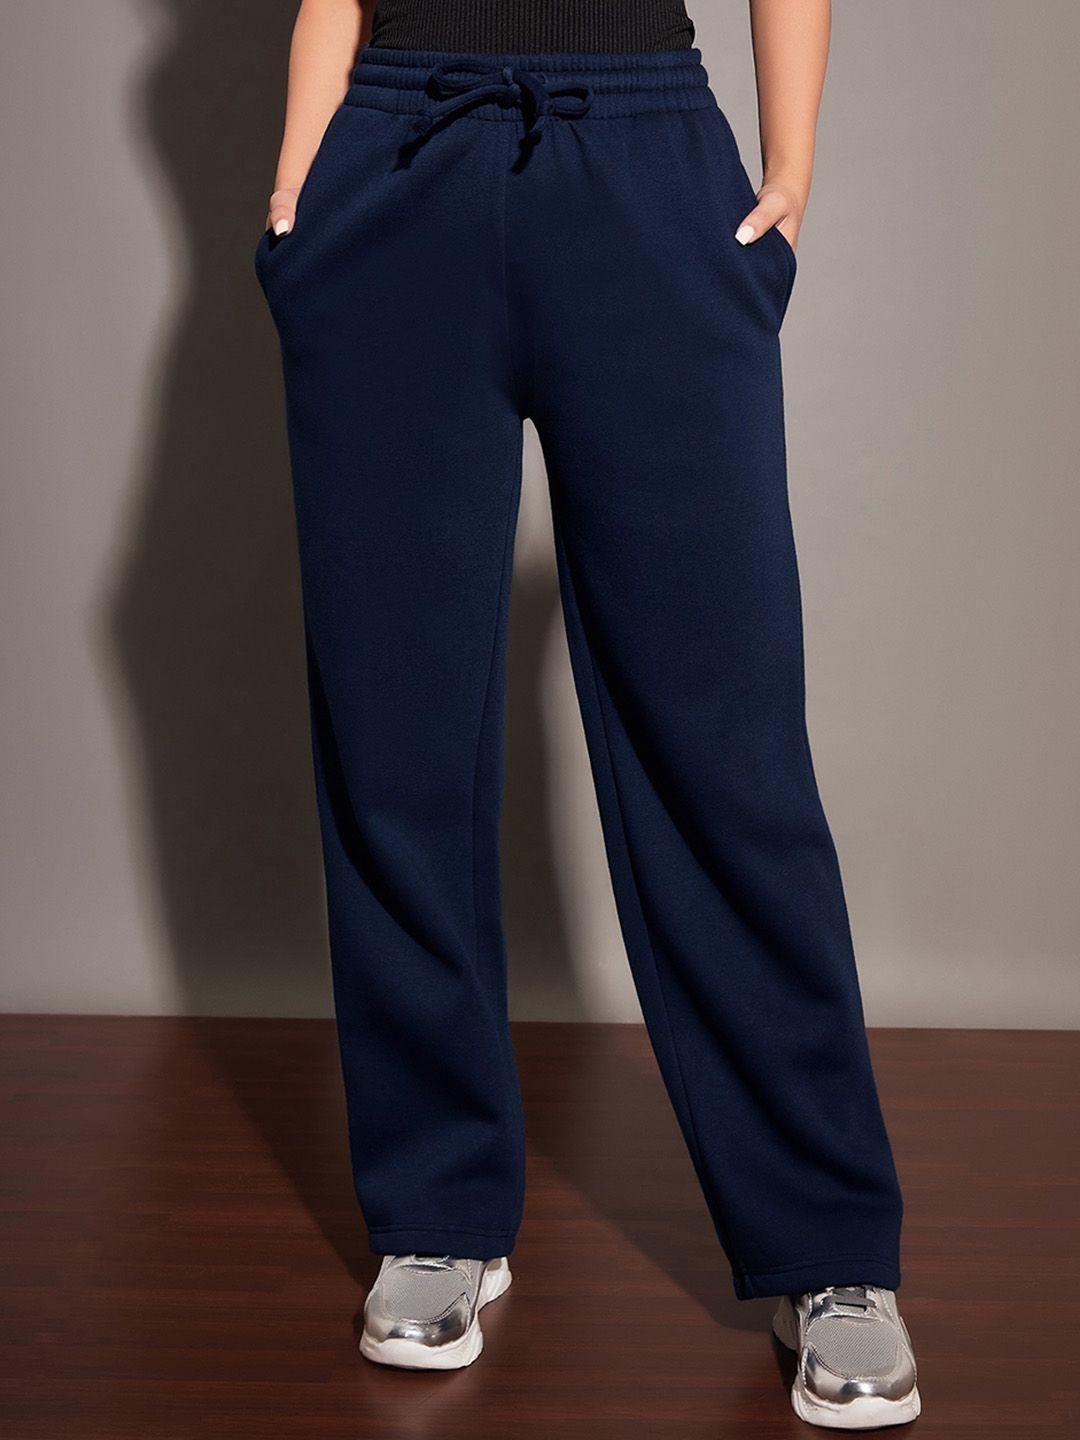 sassafras-women-navy-blue-relaxed-fit-mid-rise-fleece-track-pants